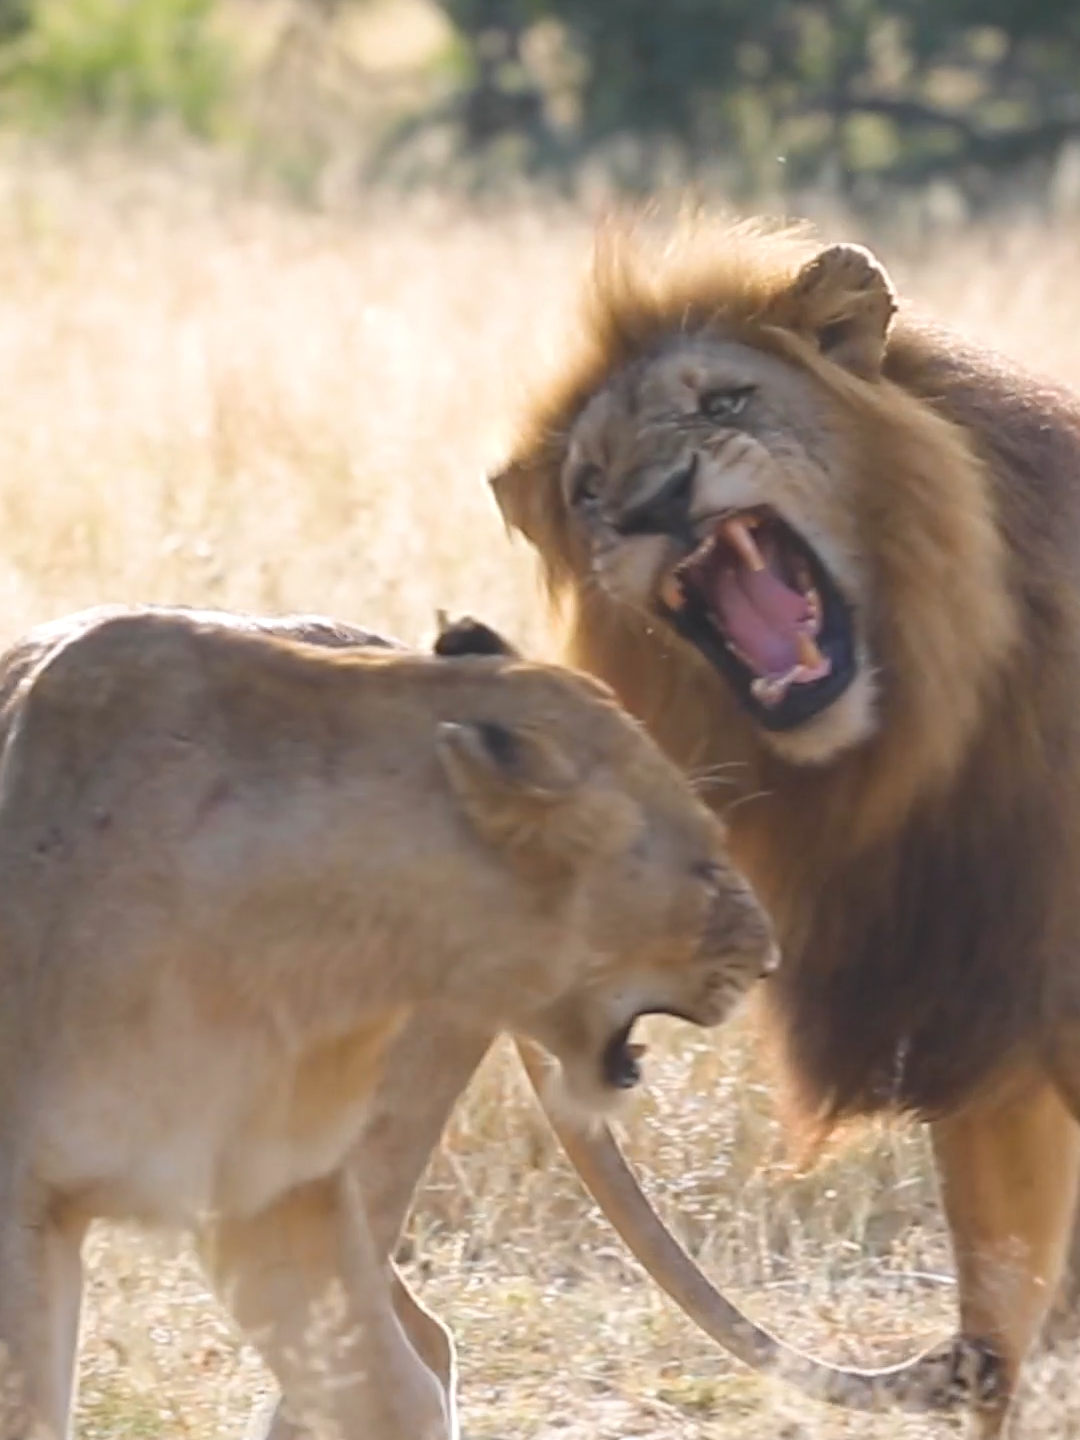 Male lion in pursuit of his lioness companion. 🦁🤎 #lion #wildlife #southafrica #safari #catsoftiktok